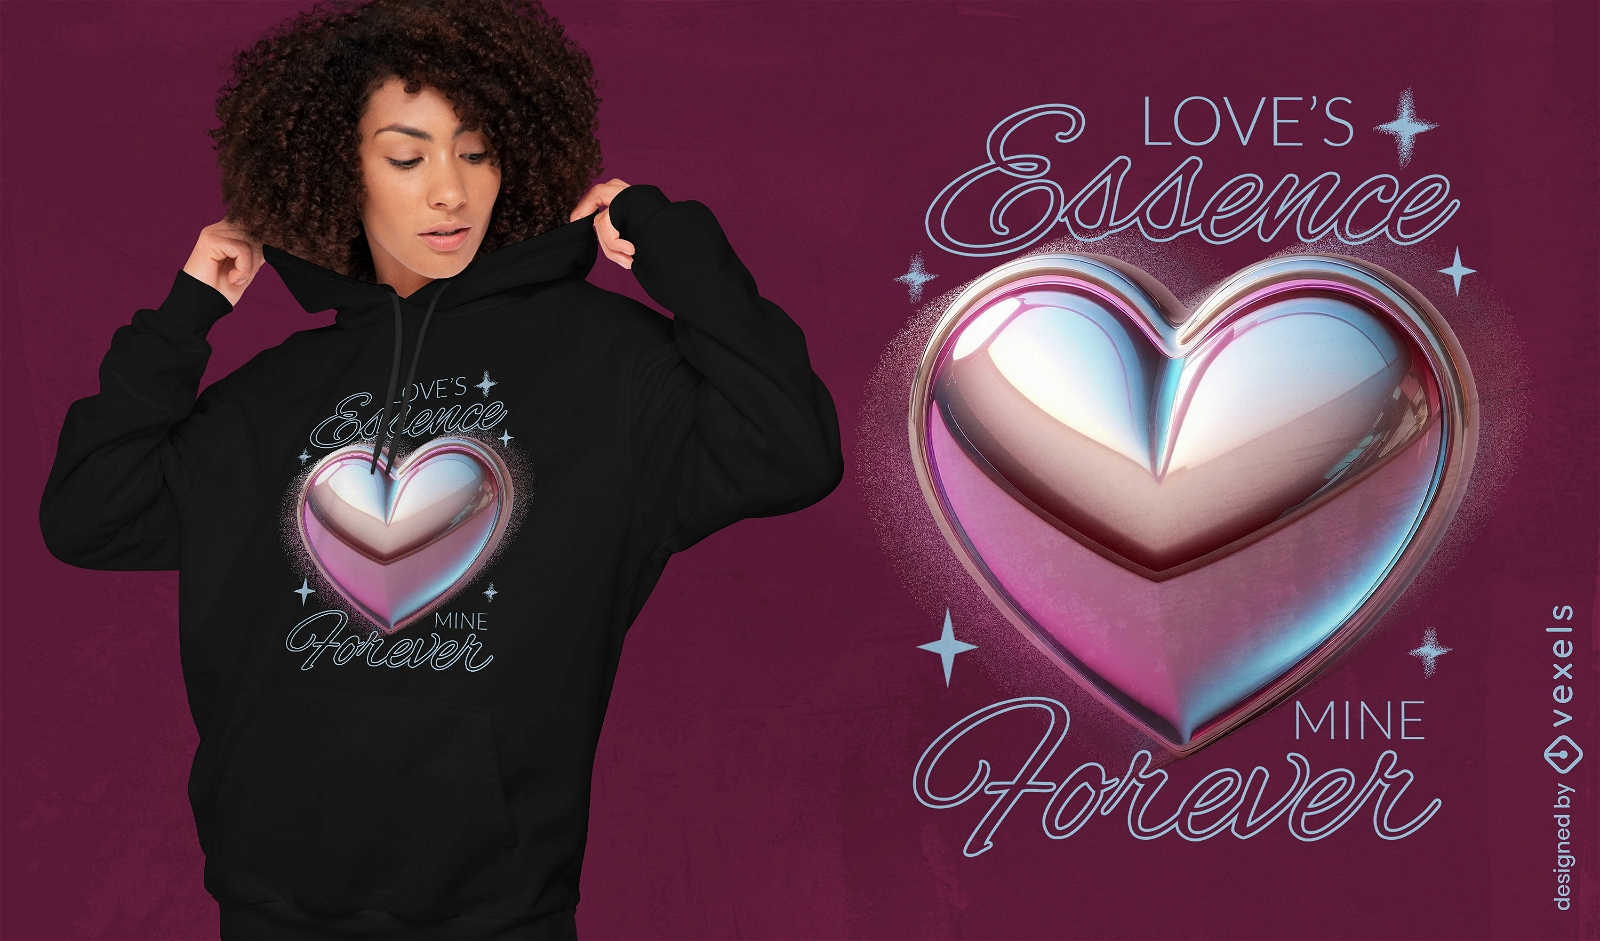 Love's essence t-shirt design